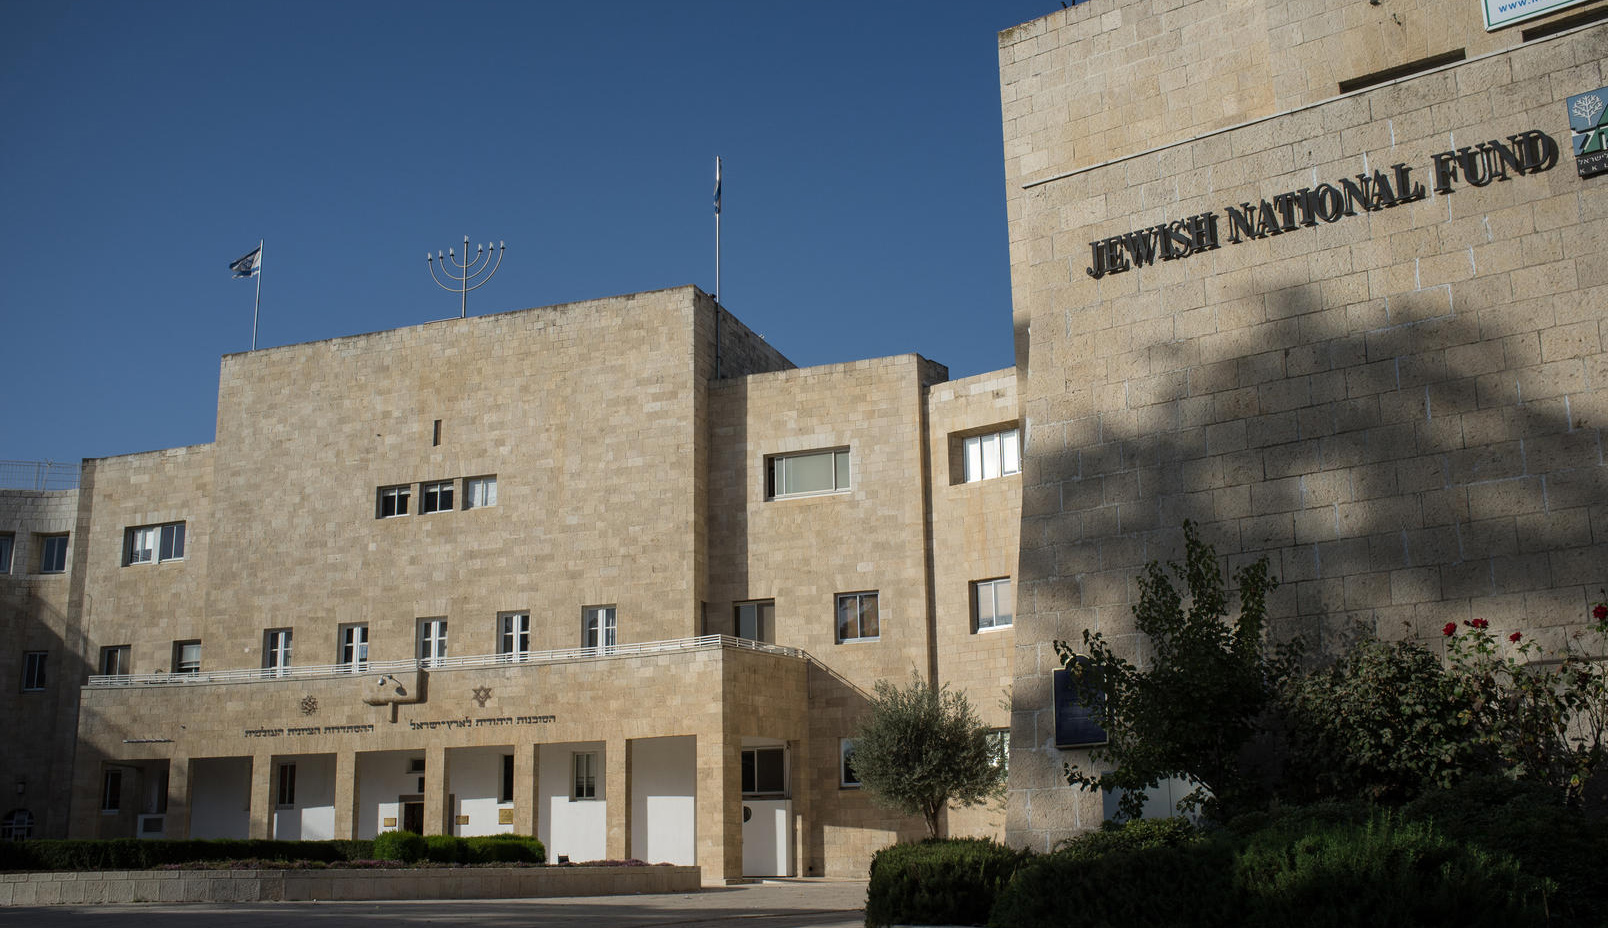 The Jerusalem headquarters of the Jewish Agency for Israel. Nir Alon/Alamy Stock Photo.
